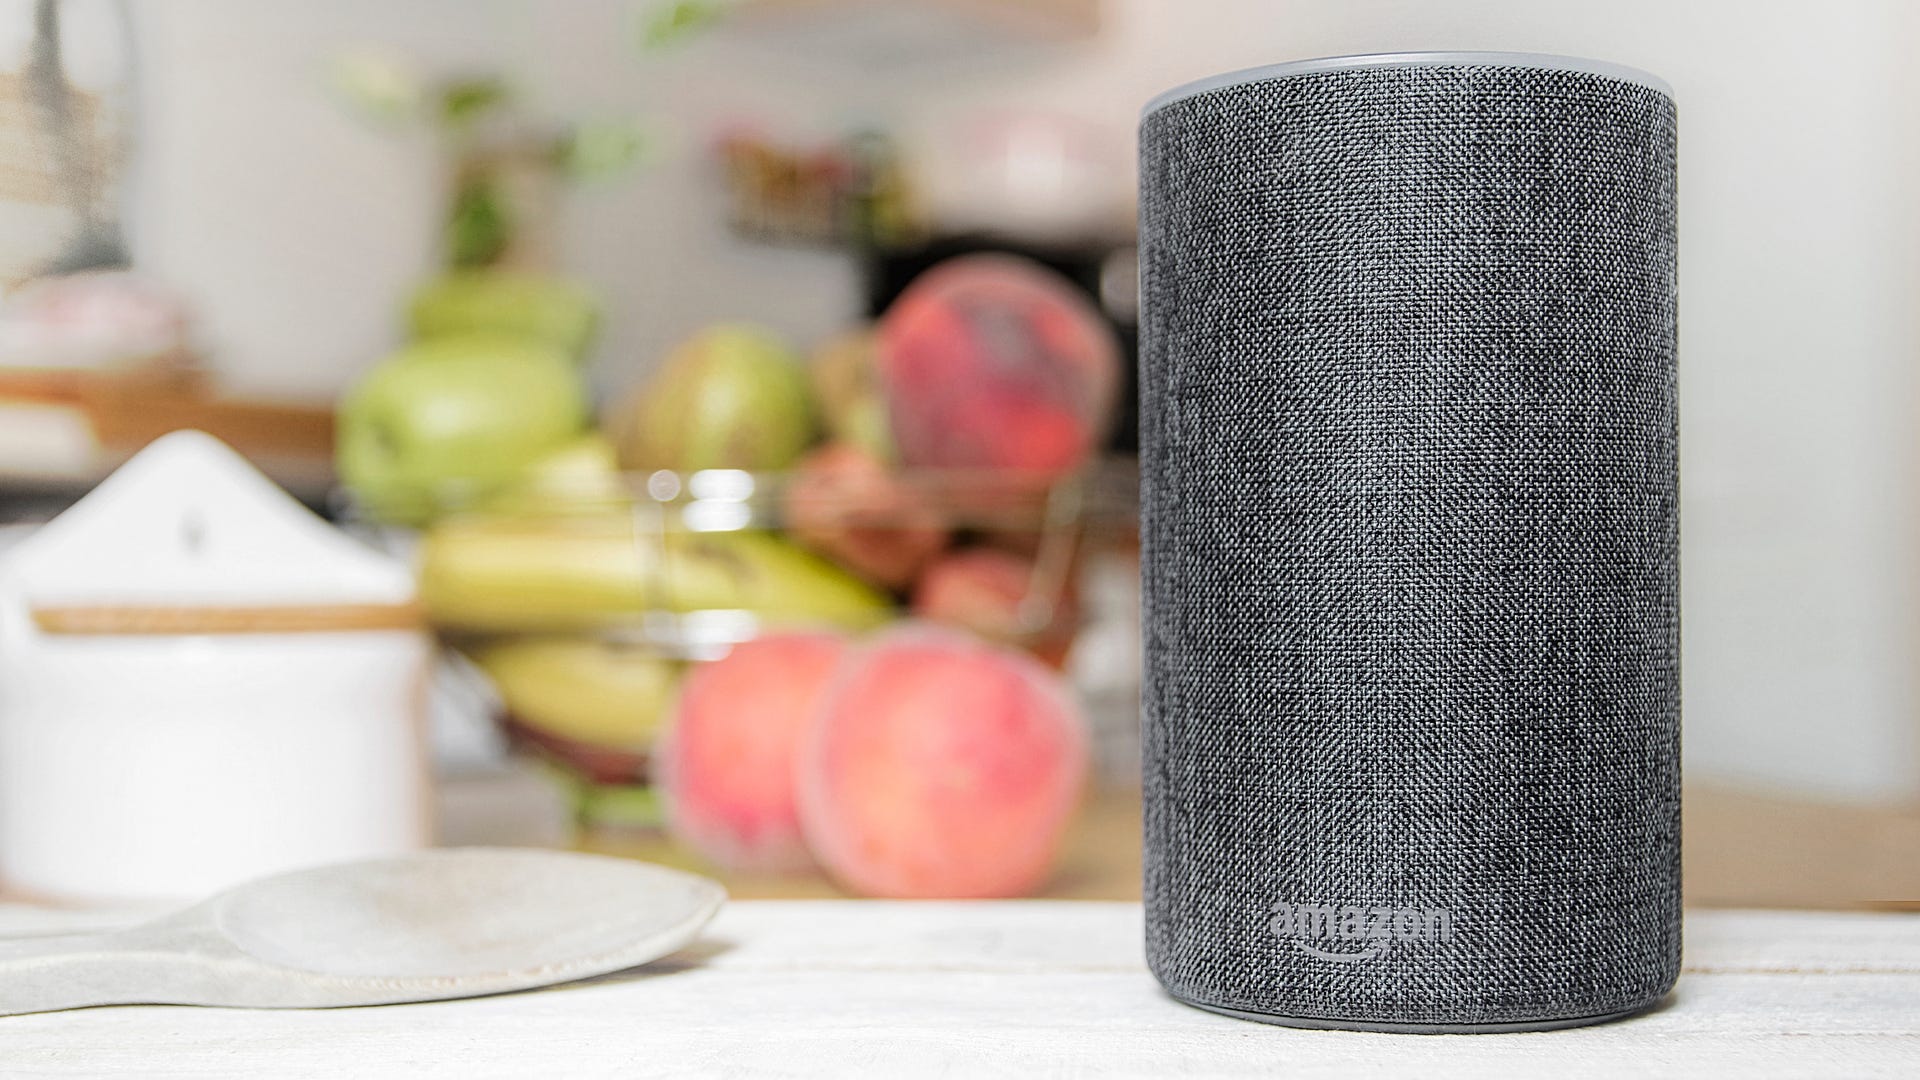 Amazon Echo Smart Home Alexa Voice Service in a kitchen.